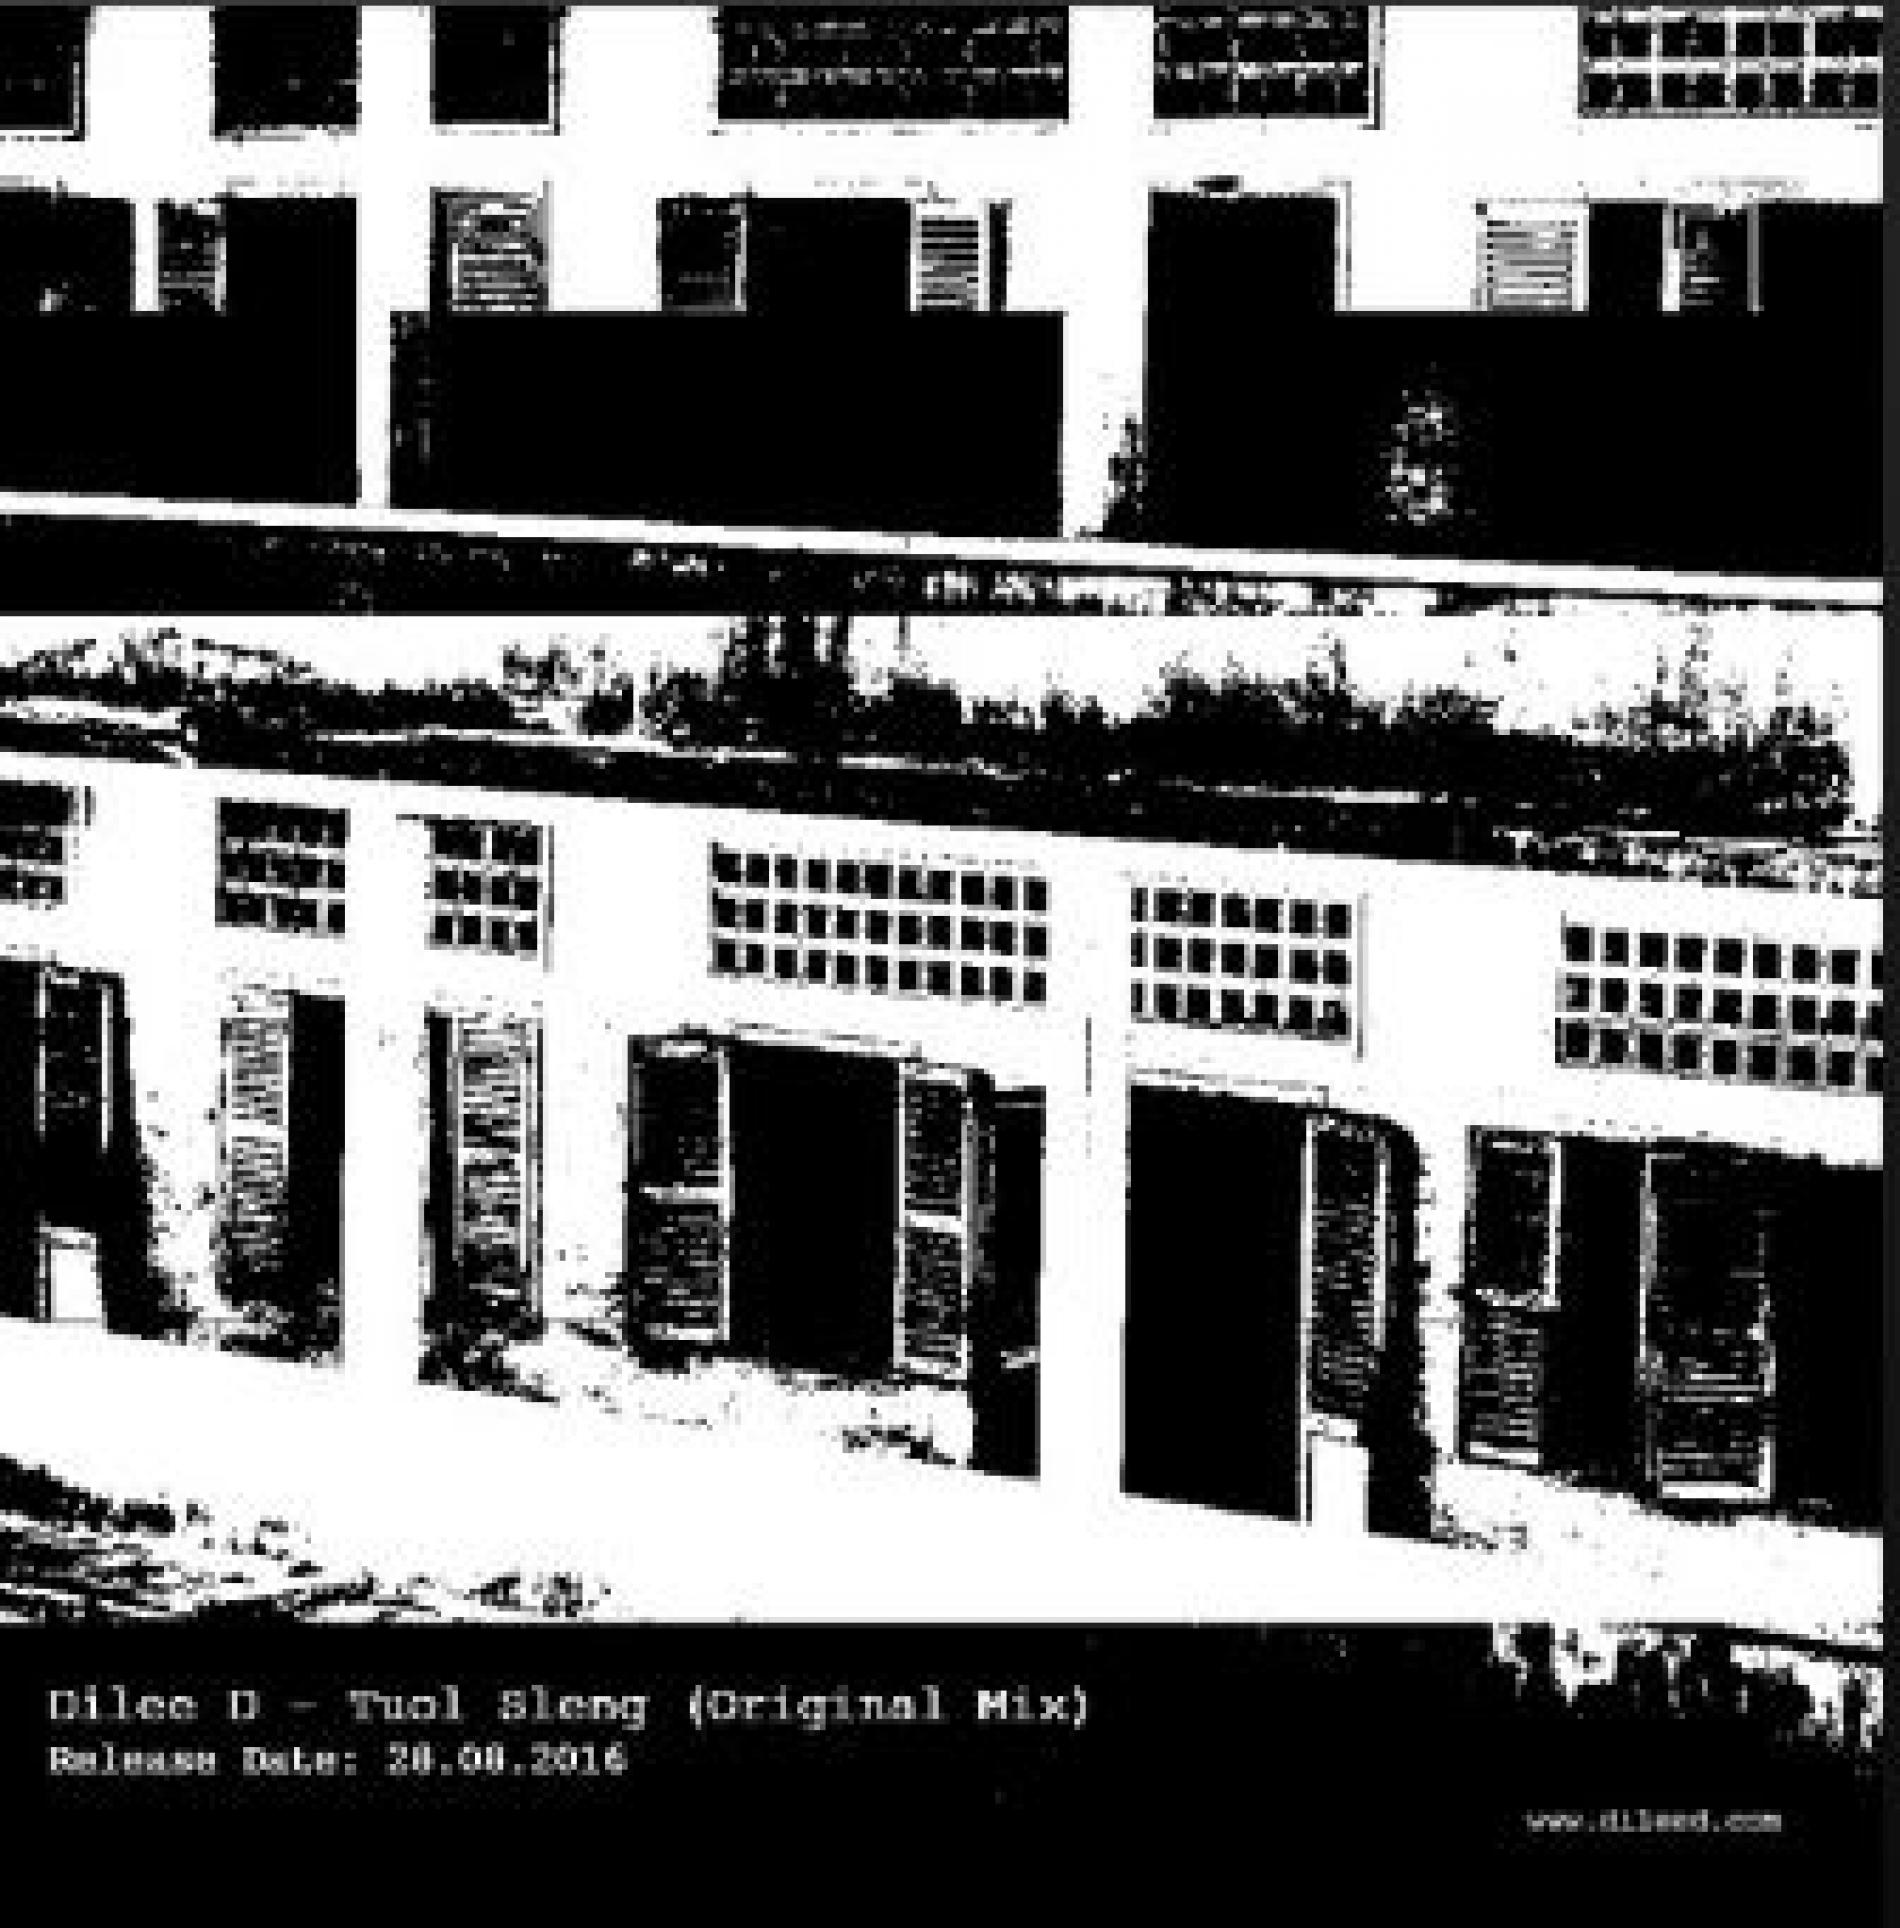 Dilee D – Tuol Sleng (Original Mix)